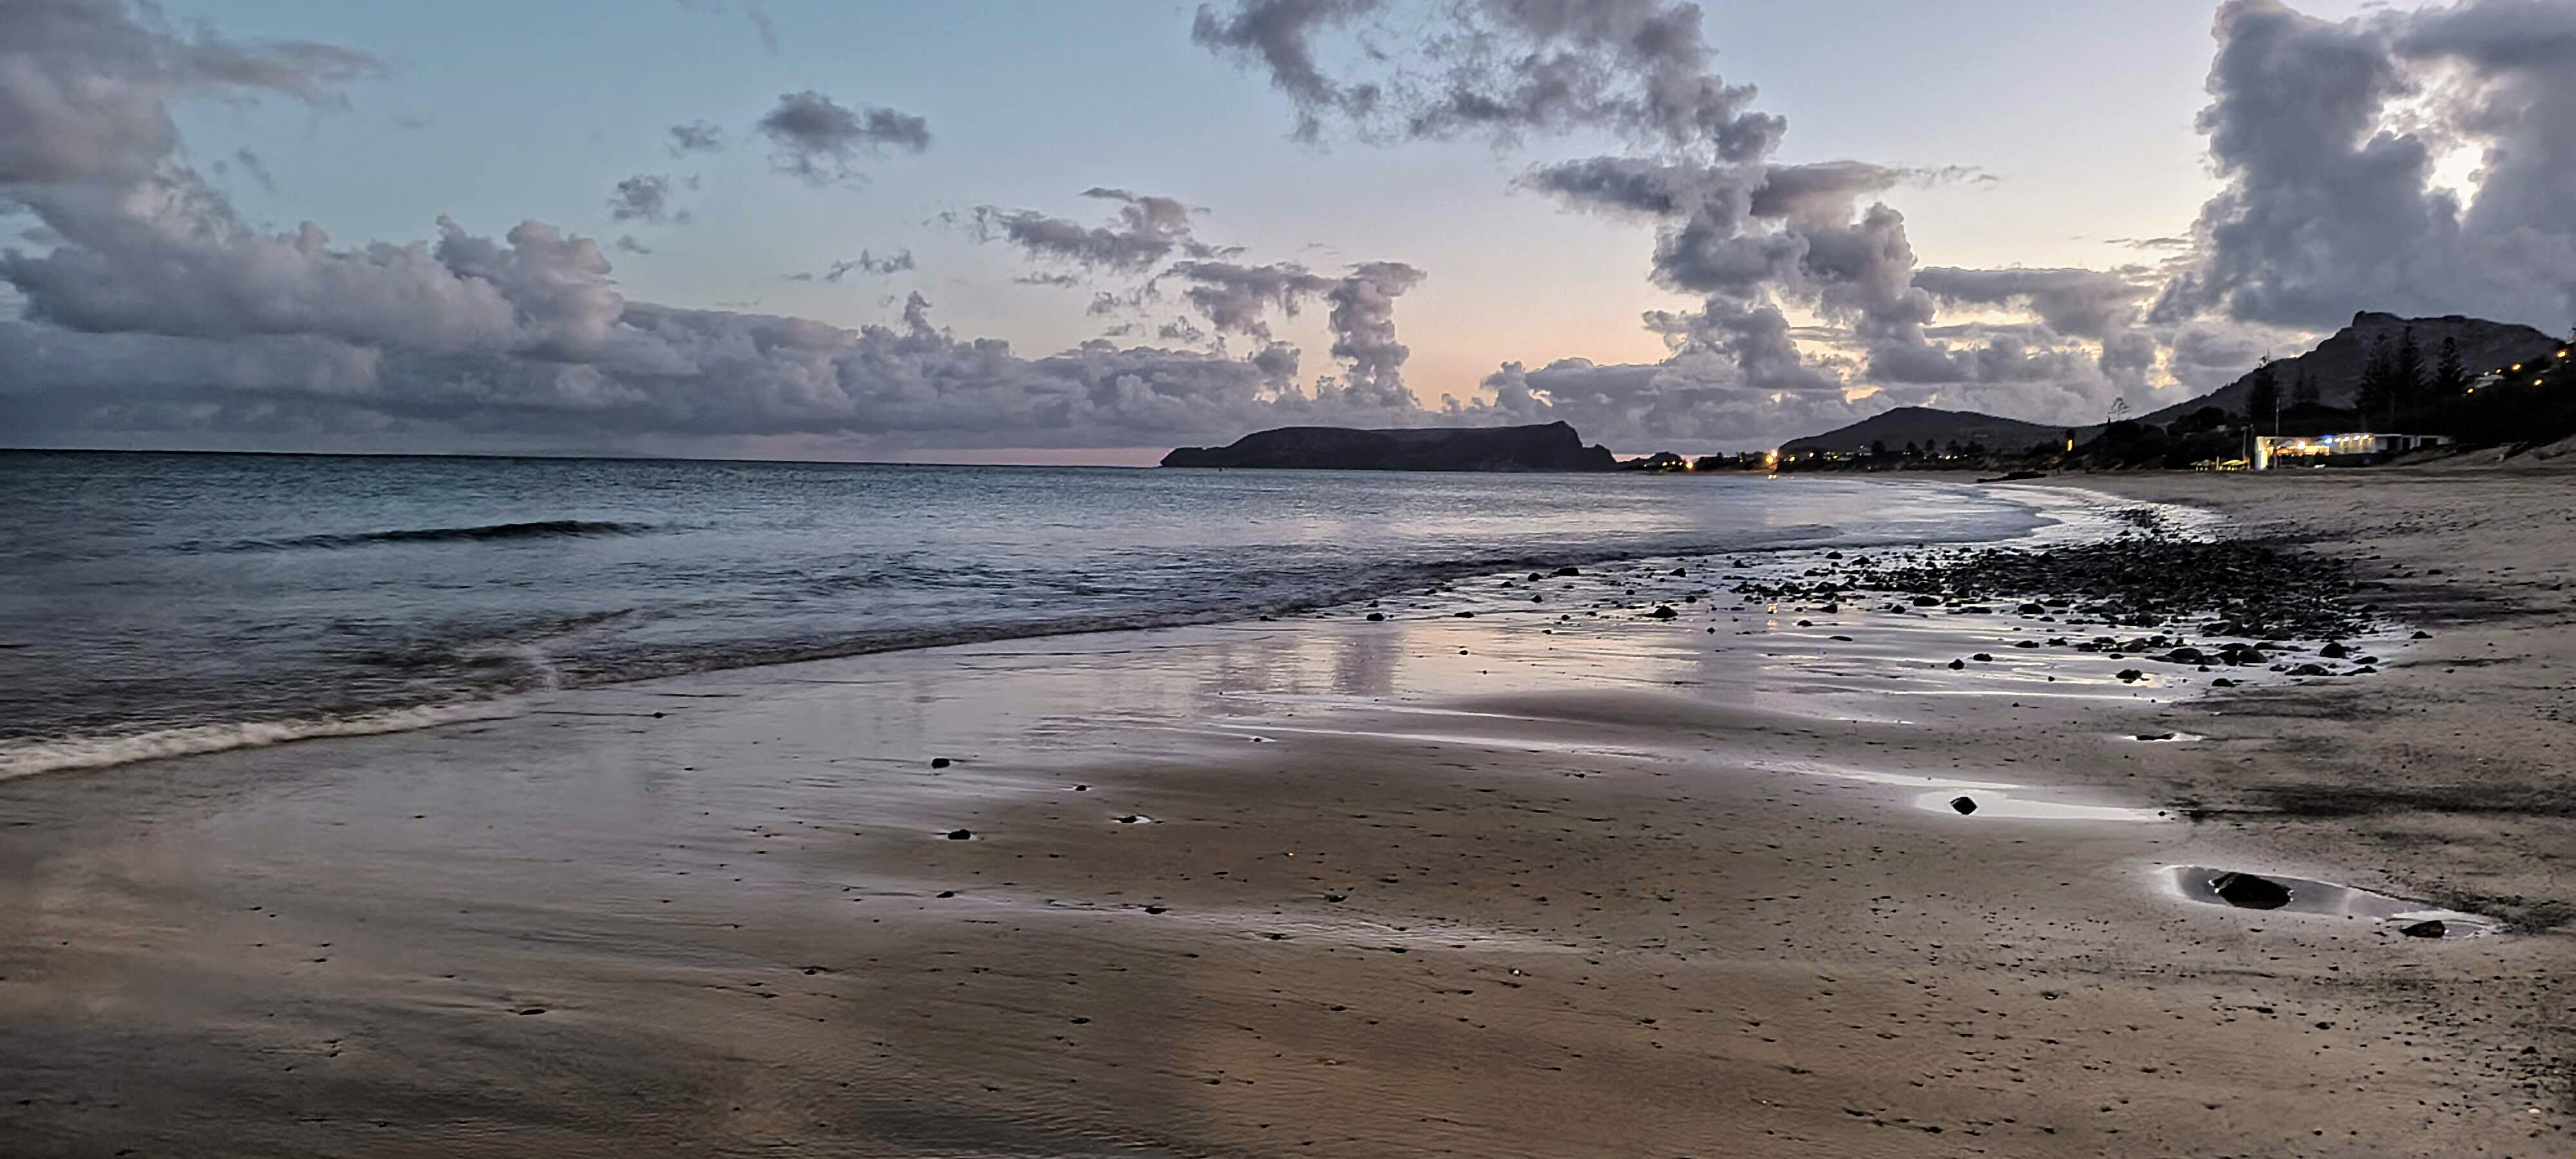 Early evening view of Porto Santo beach from Vila Baleira